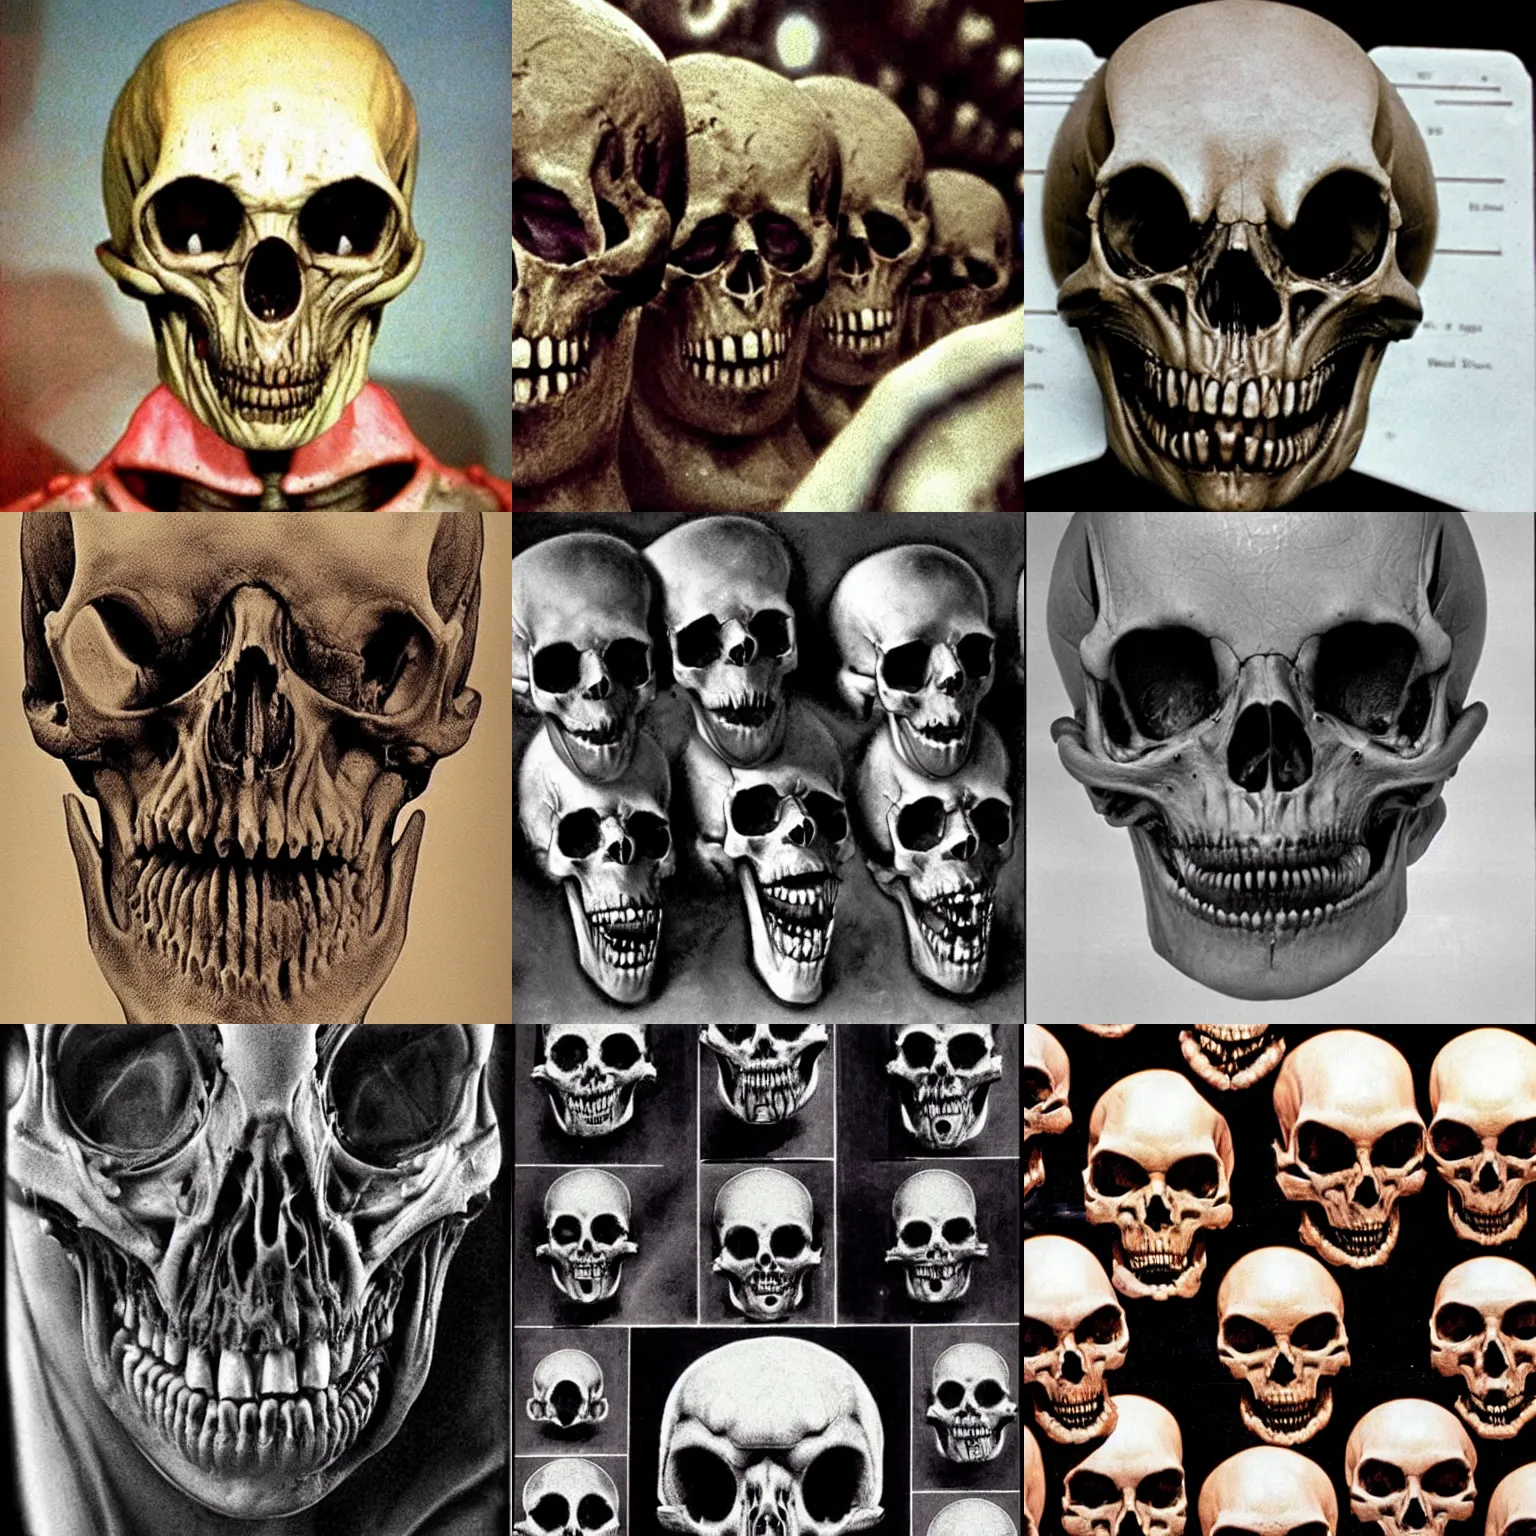 Prompt: alien skulls from horror sci-fi film. Disturbing medical imagery.